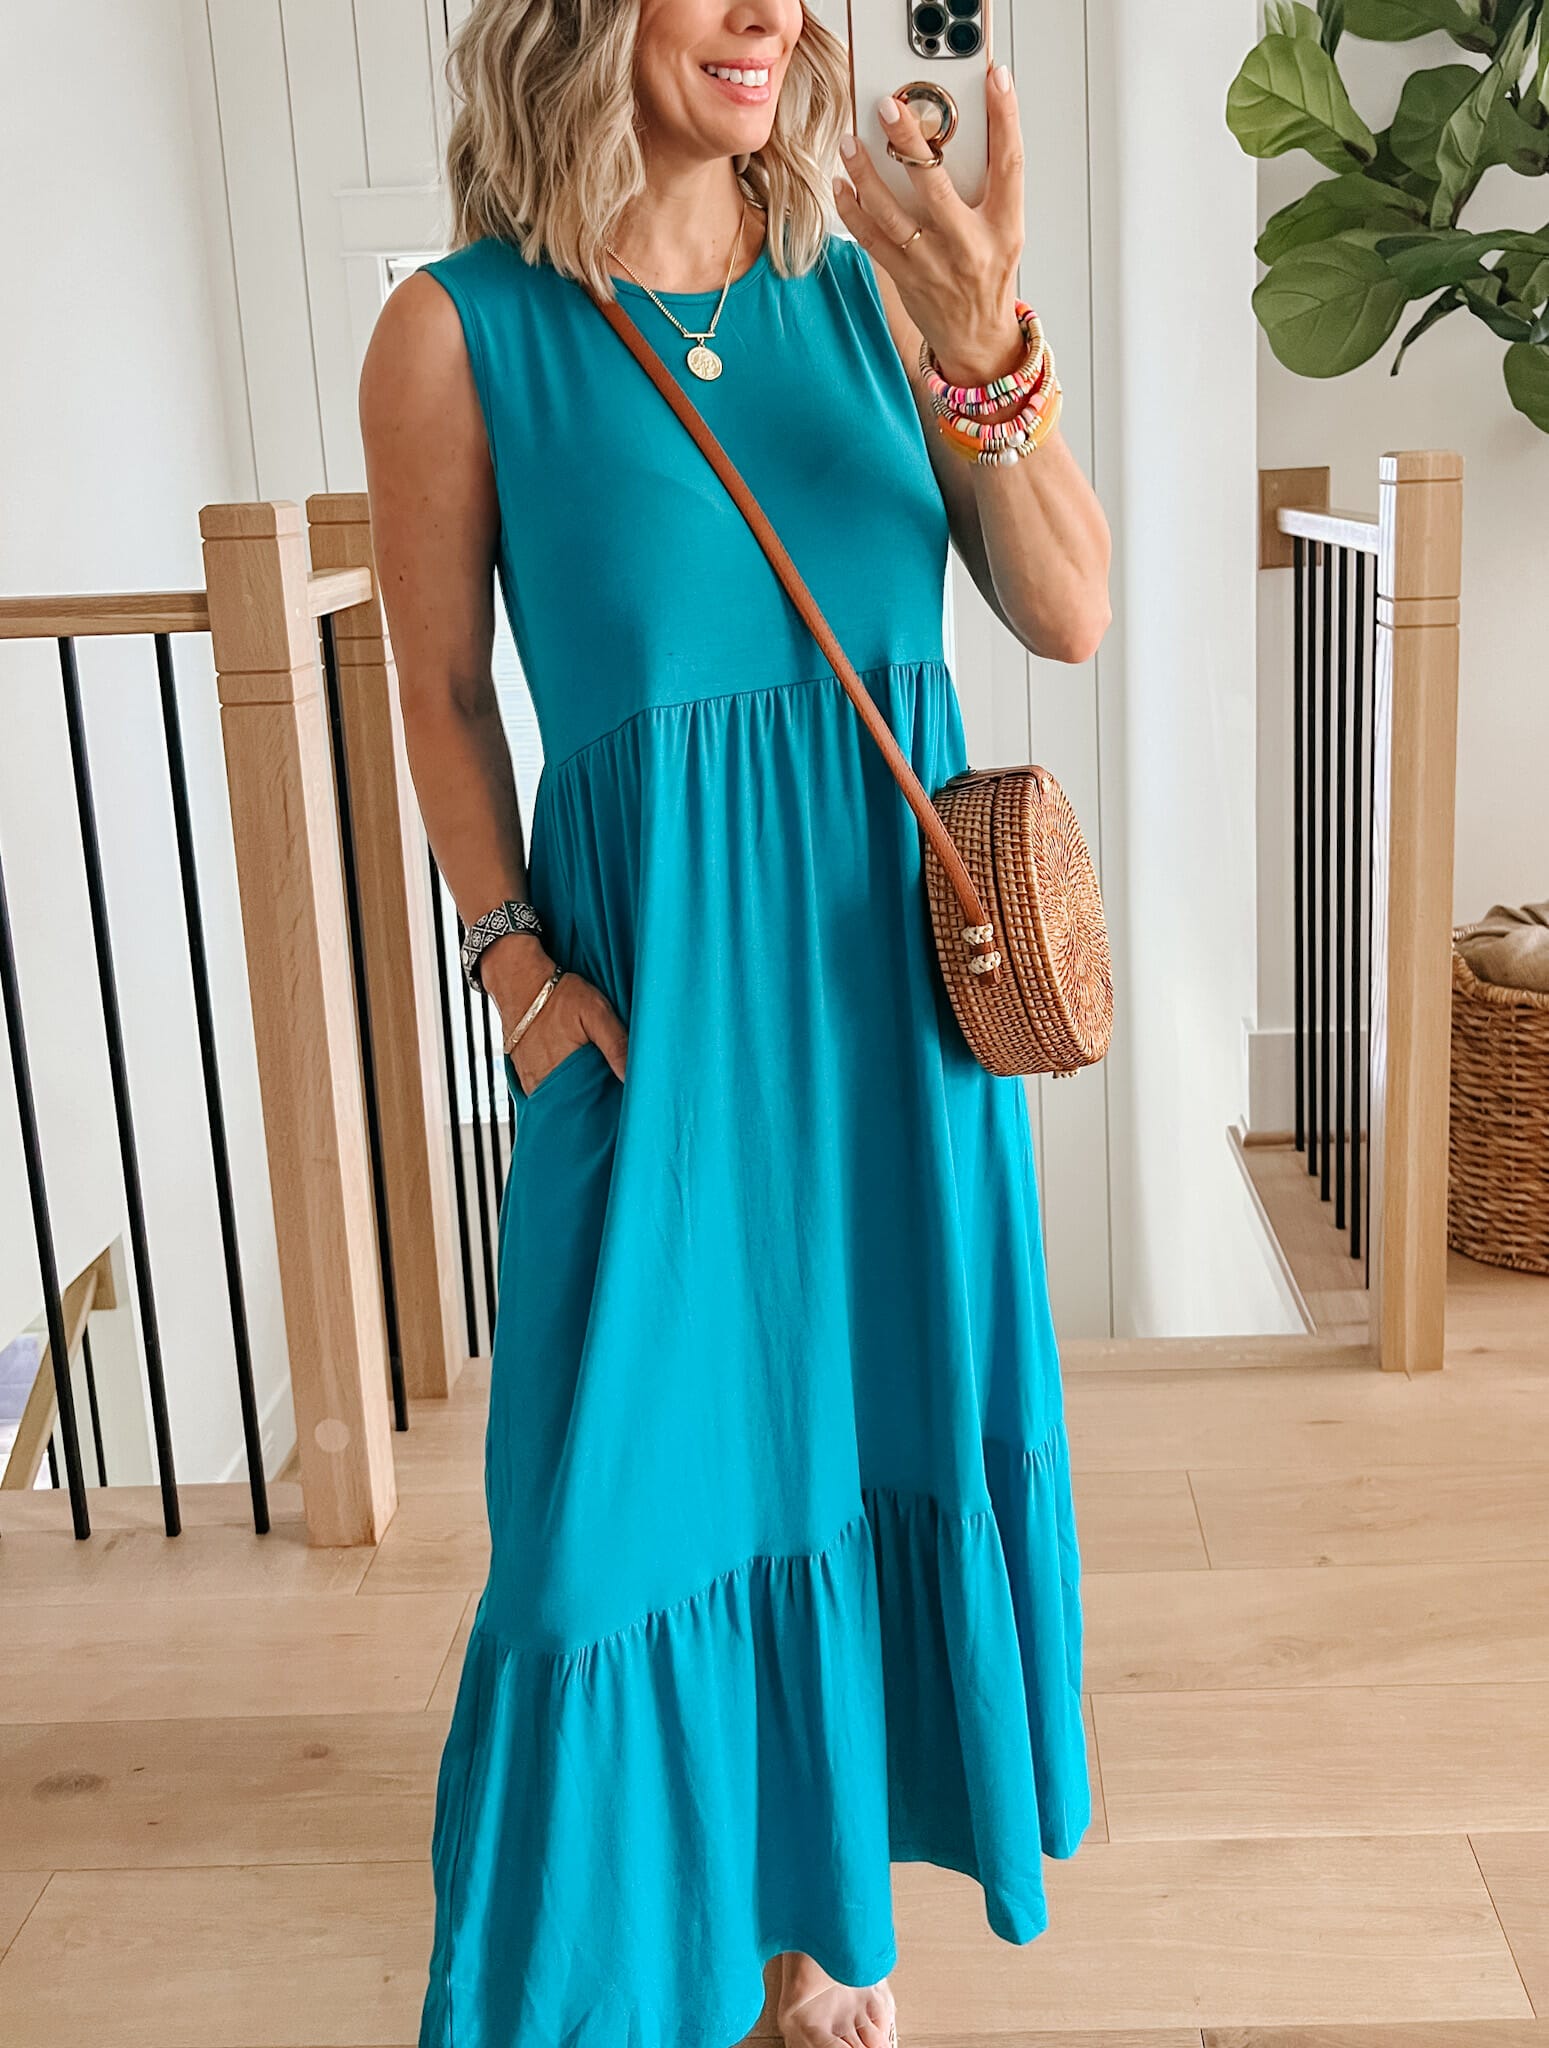 Turquoise Maxi Dress, Wedges, Crossbody 